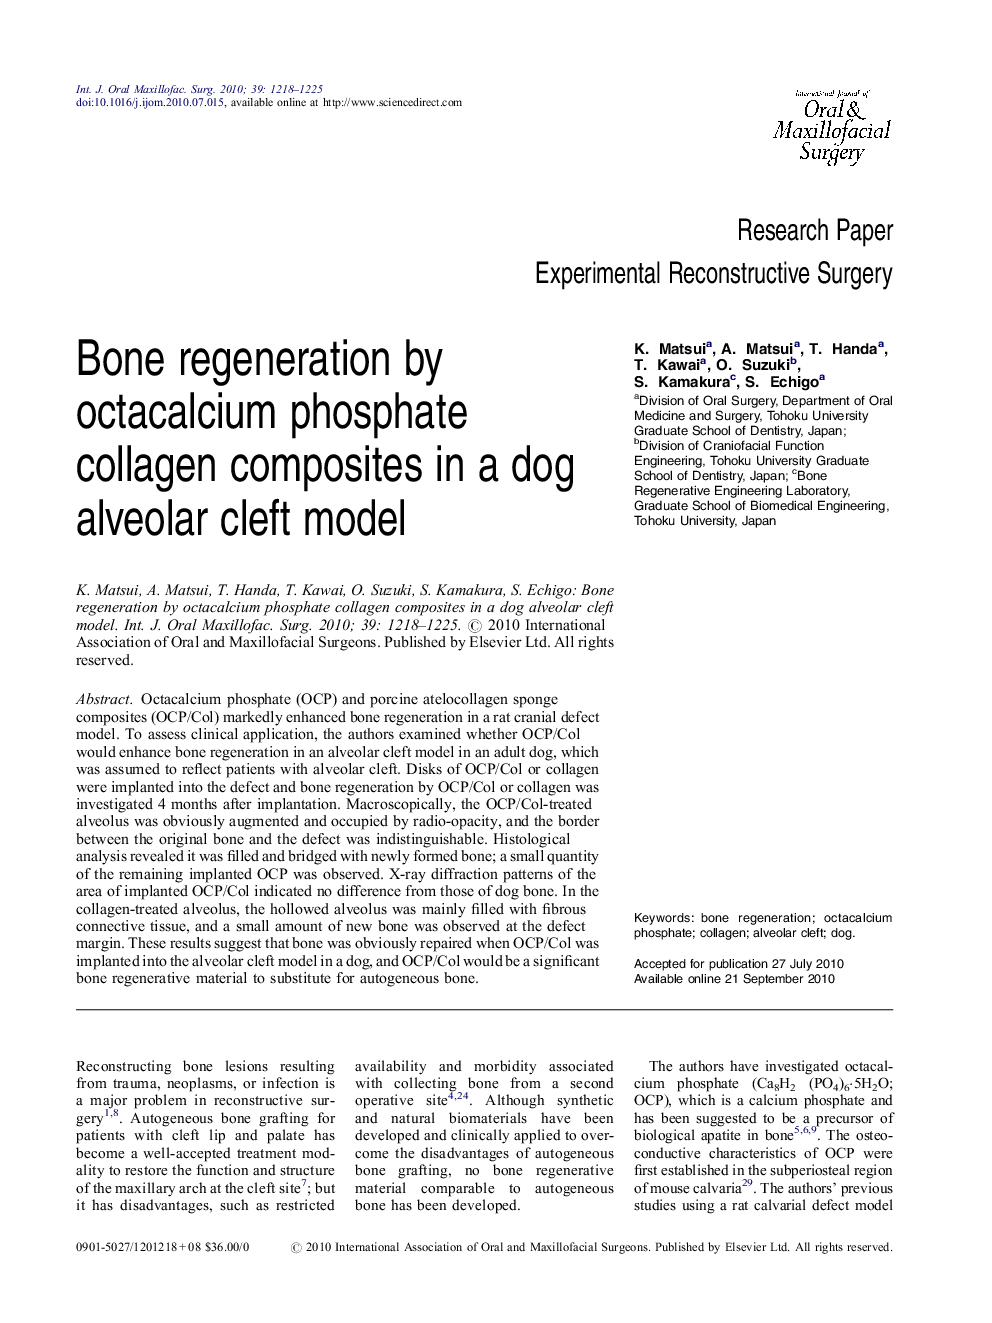 Bone regeneration by octacalcium phosphate collagen composites in a dog alveolar cleft model